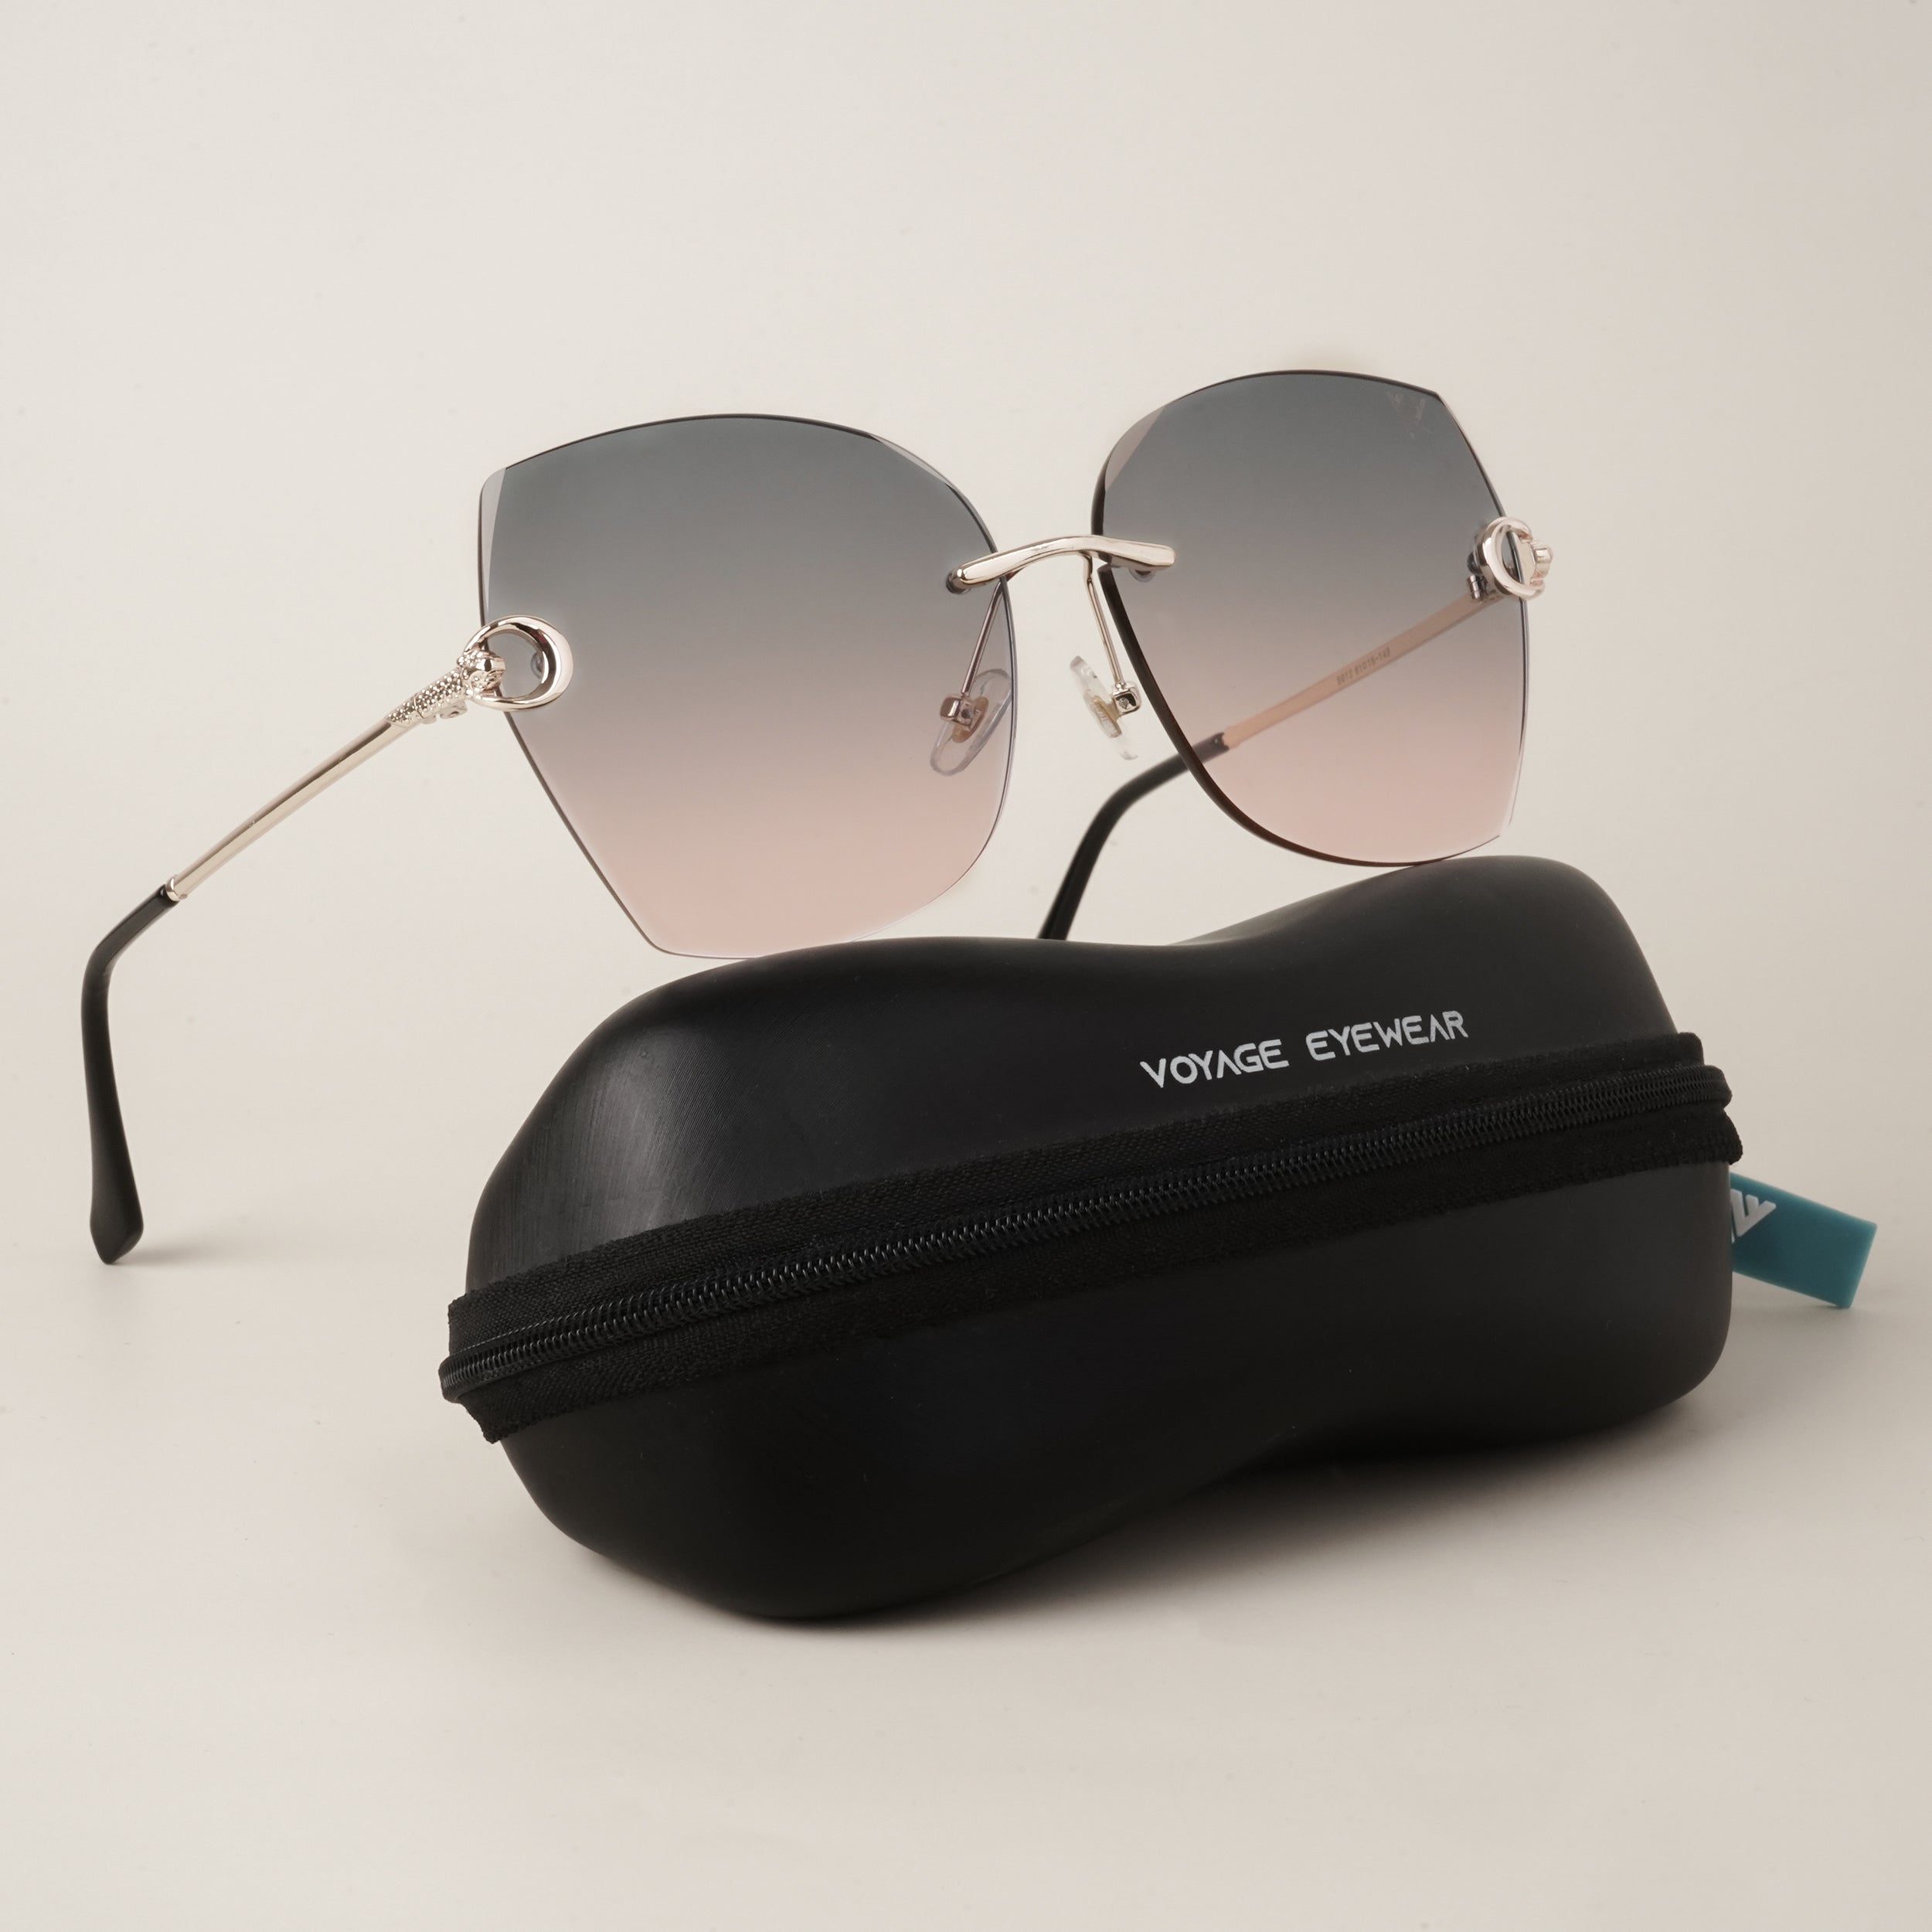 Santos de Cartier Sunglasses | Welcome by Waiting on Martha